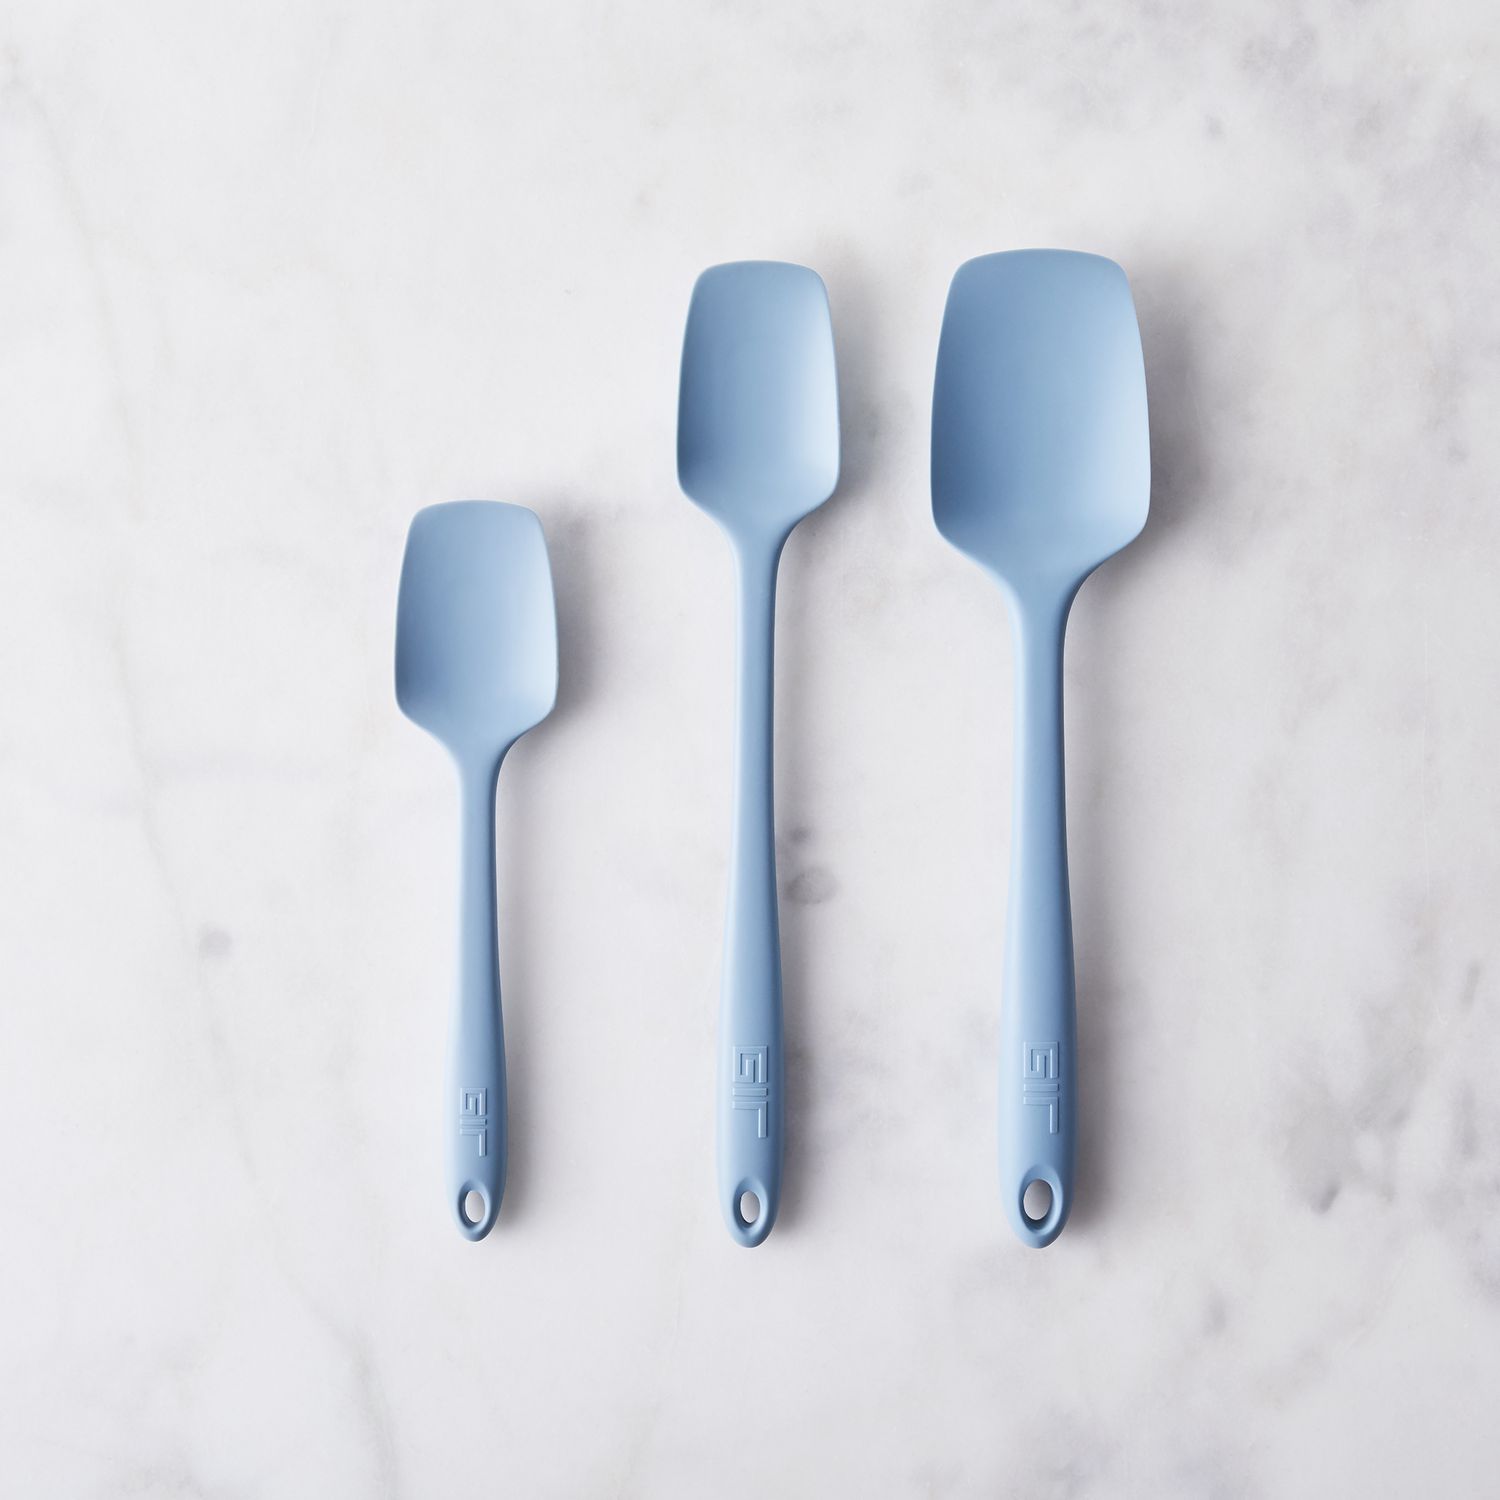 GIR Silicone Kitchen Spoons (Set of 3), BPA-Free, Heat Resistant